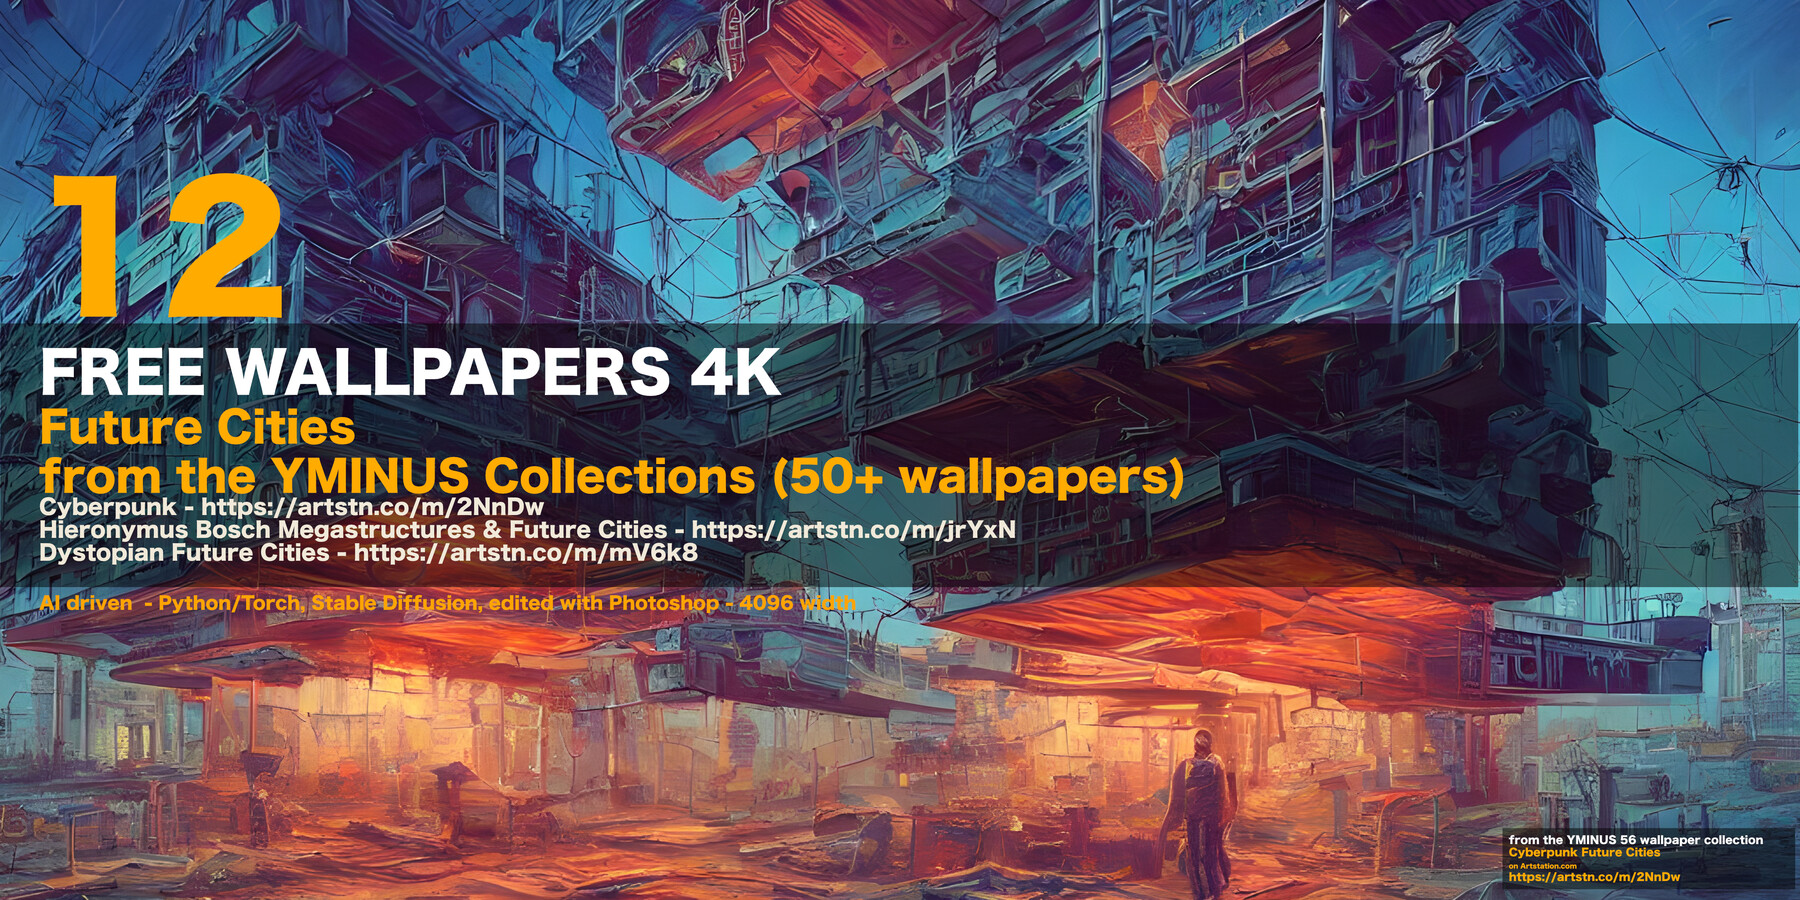 ArtStation - Free 4K Wallpapers - Future Cities | Artworks